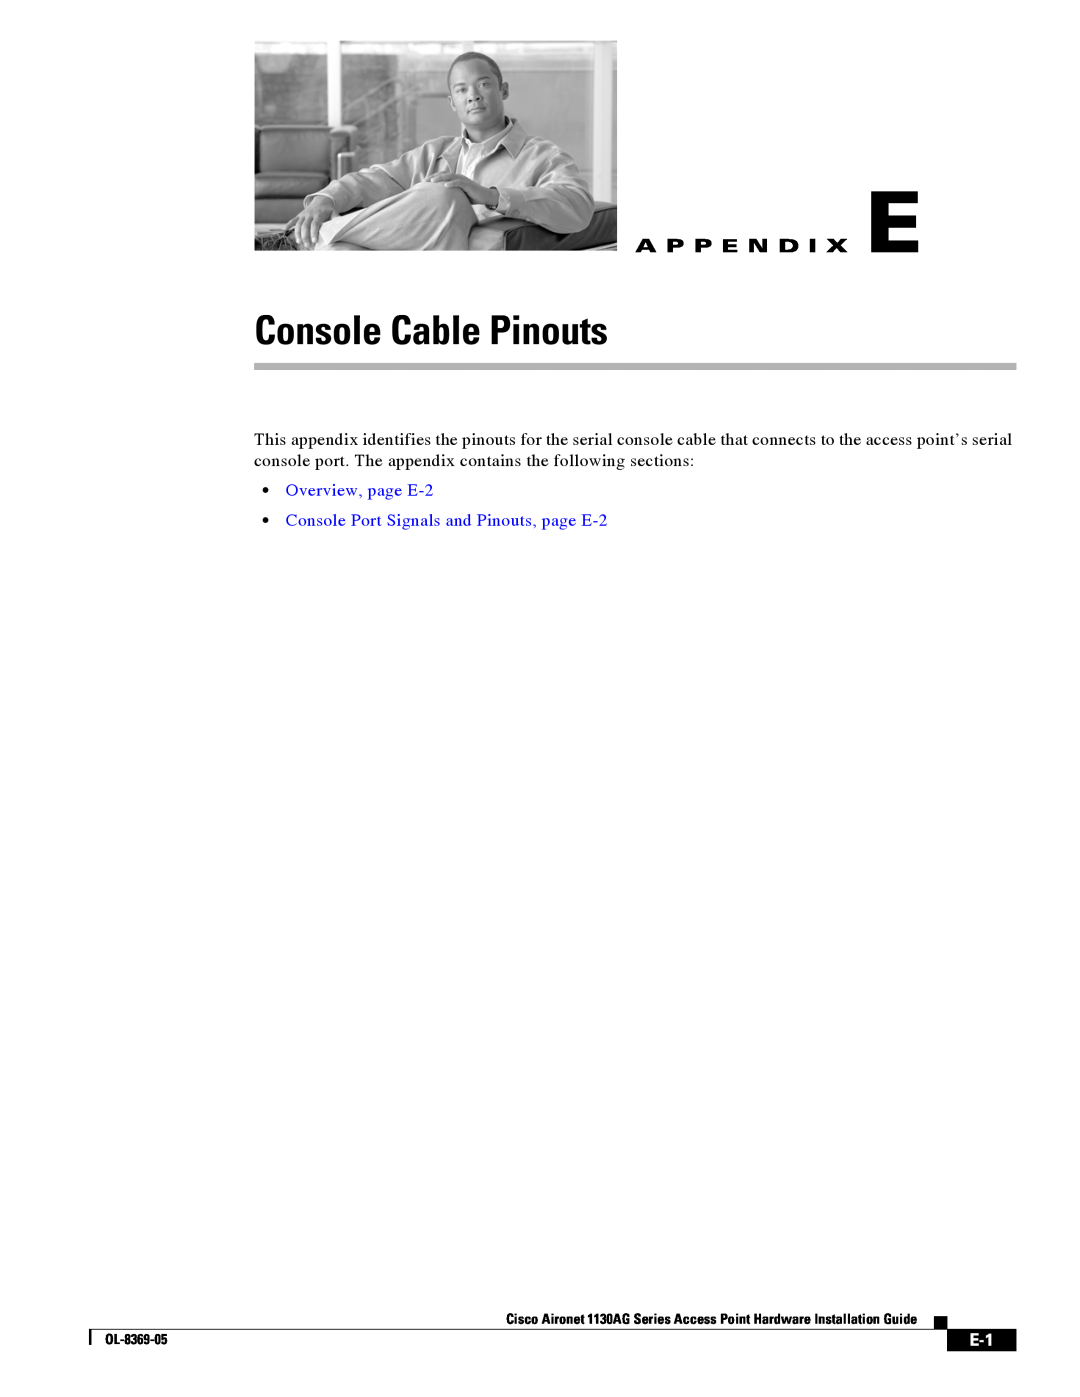 Cisco Systems 1130AG manual Console Cable Pinouts, A P P E N D I X E, OL-8369-05 